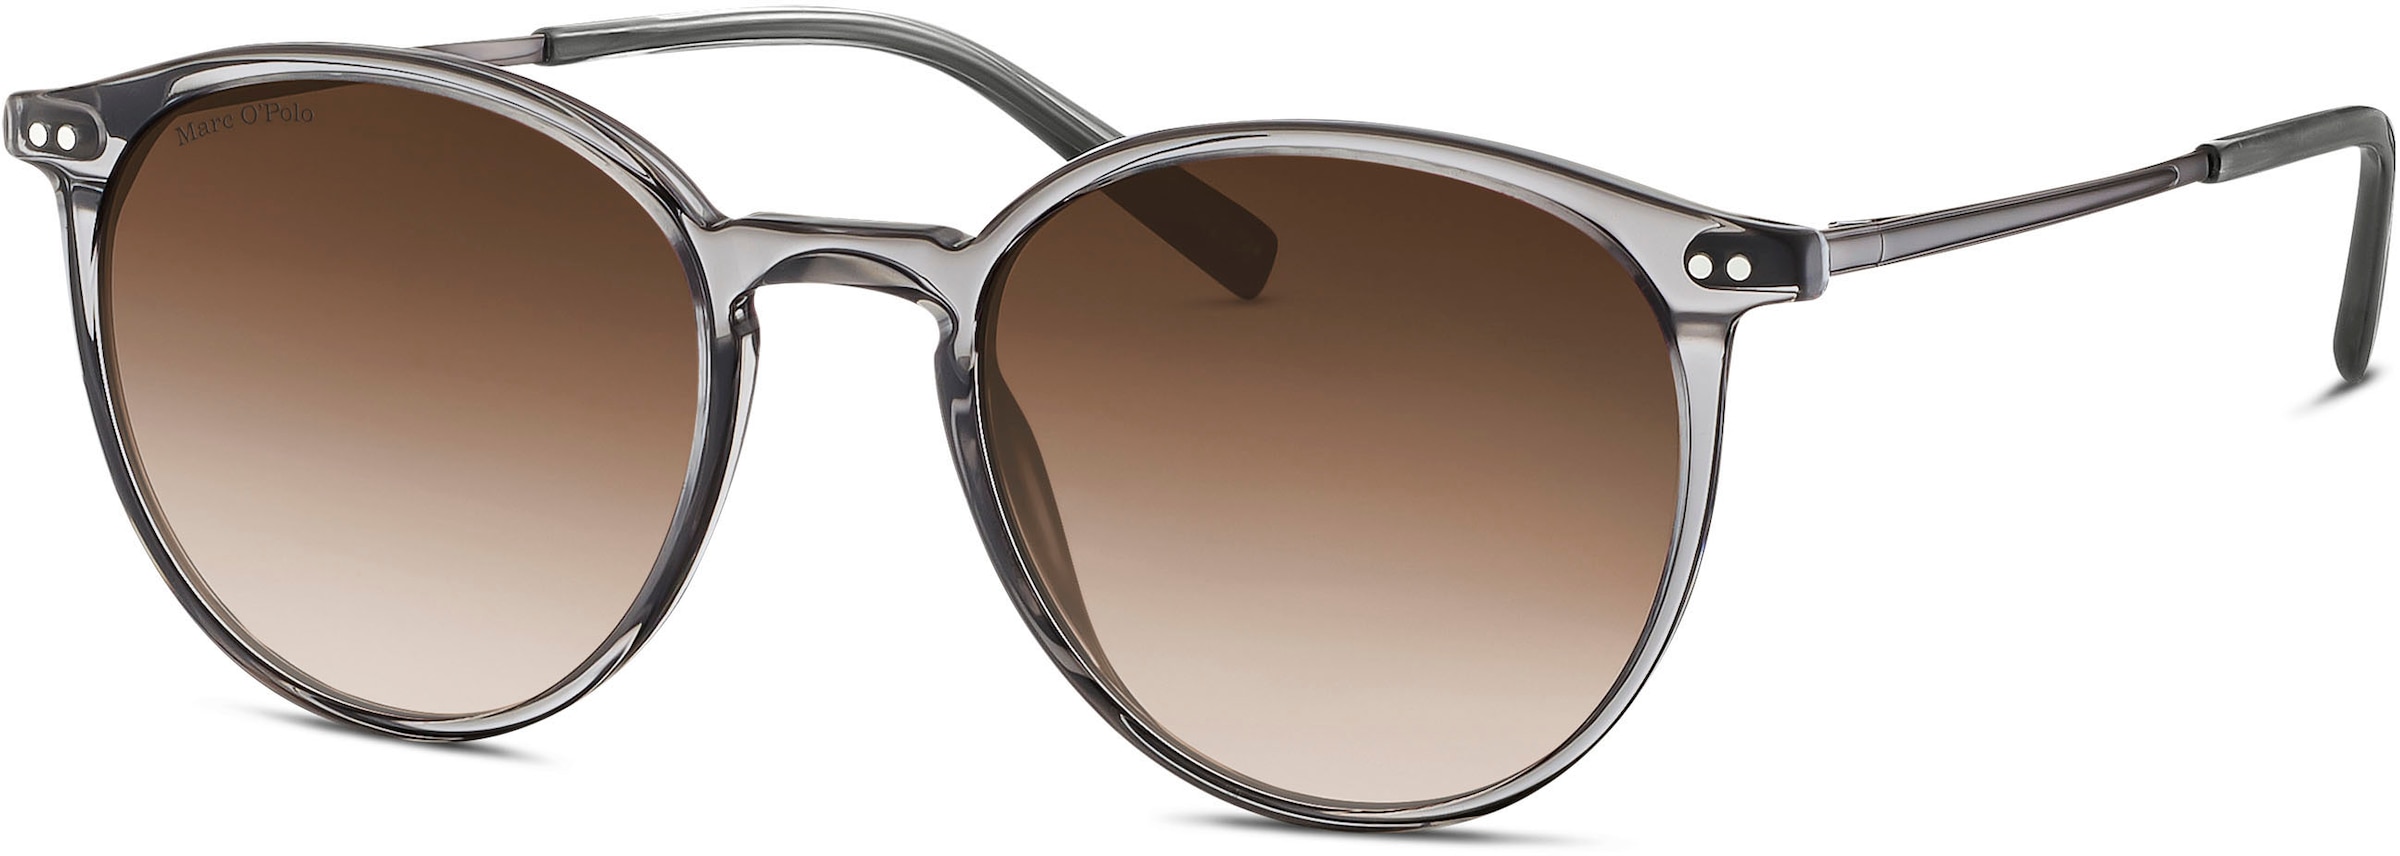 Marc O'Polo Sonnenbrille »Modell 506183«, Panto-Form